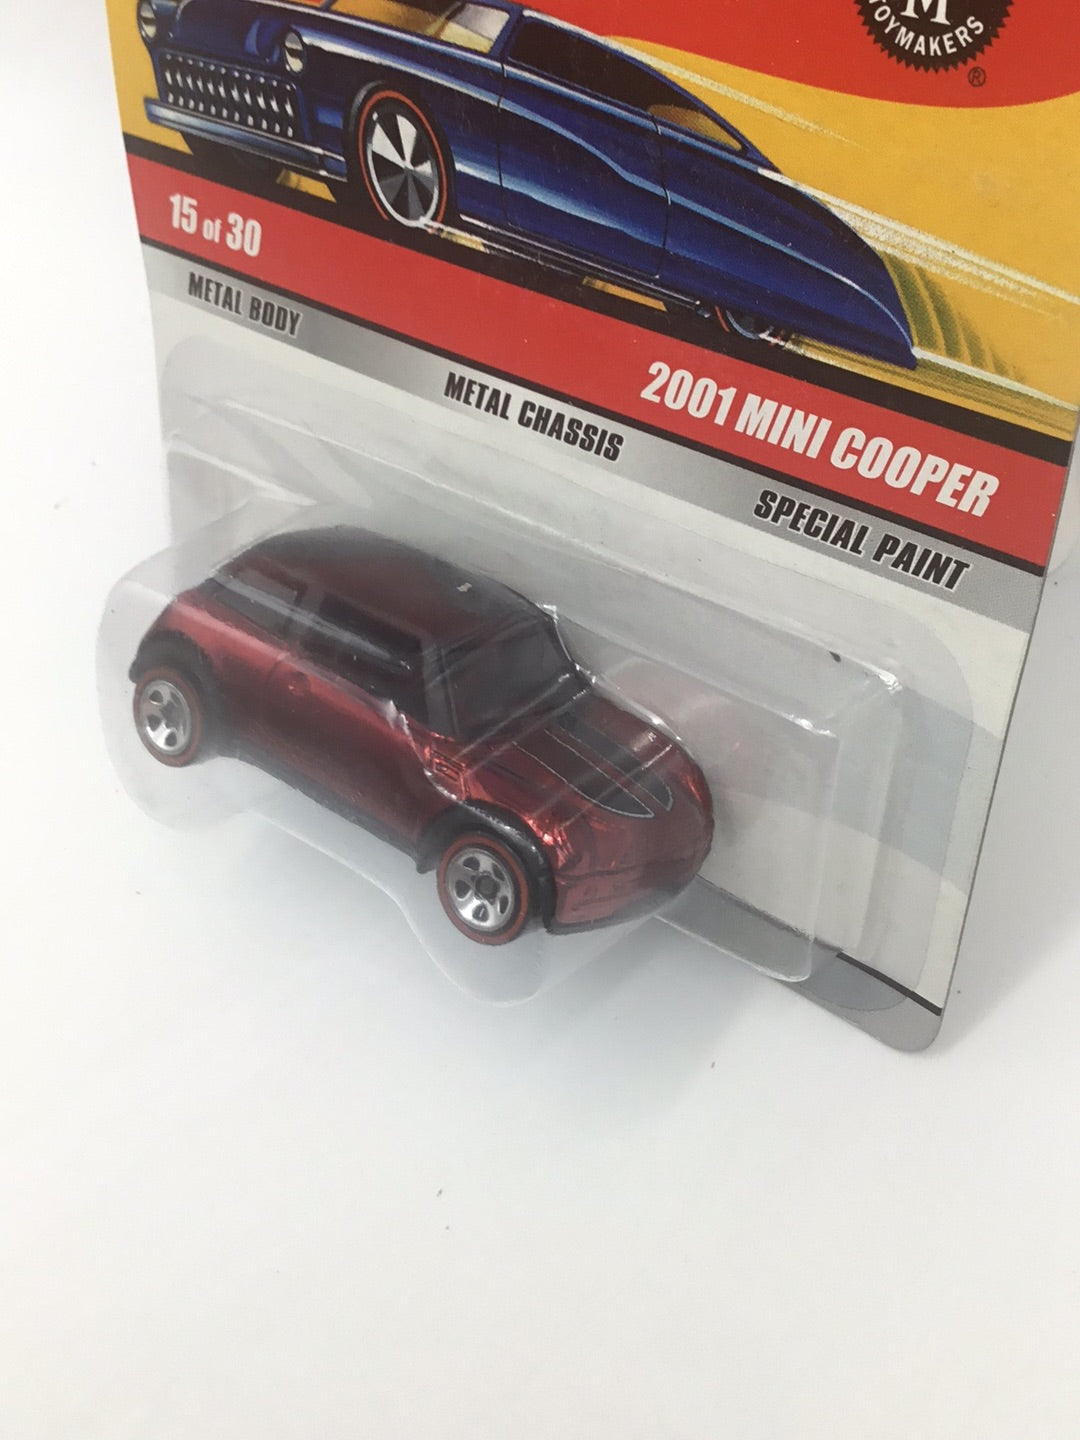 Hot wheels classics series 5 2001 Mini Cooper red